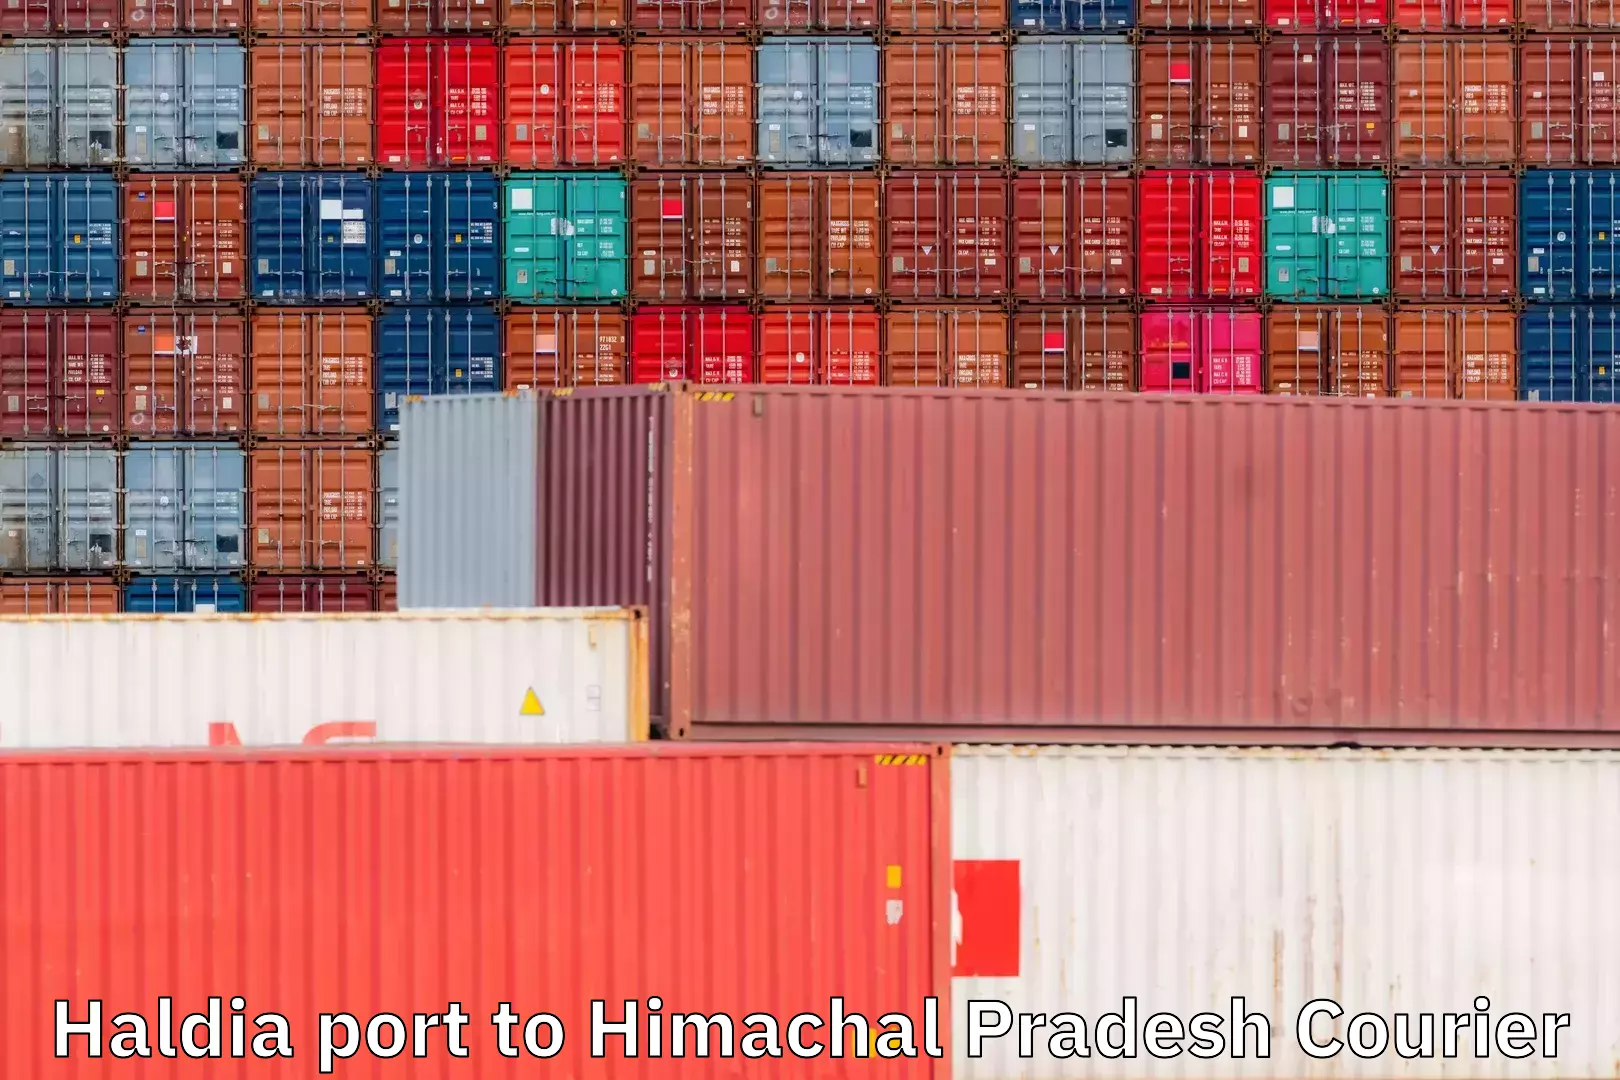 Courier service booking Haldia port to Himachal Pradesh